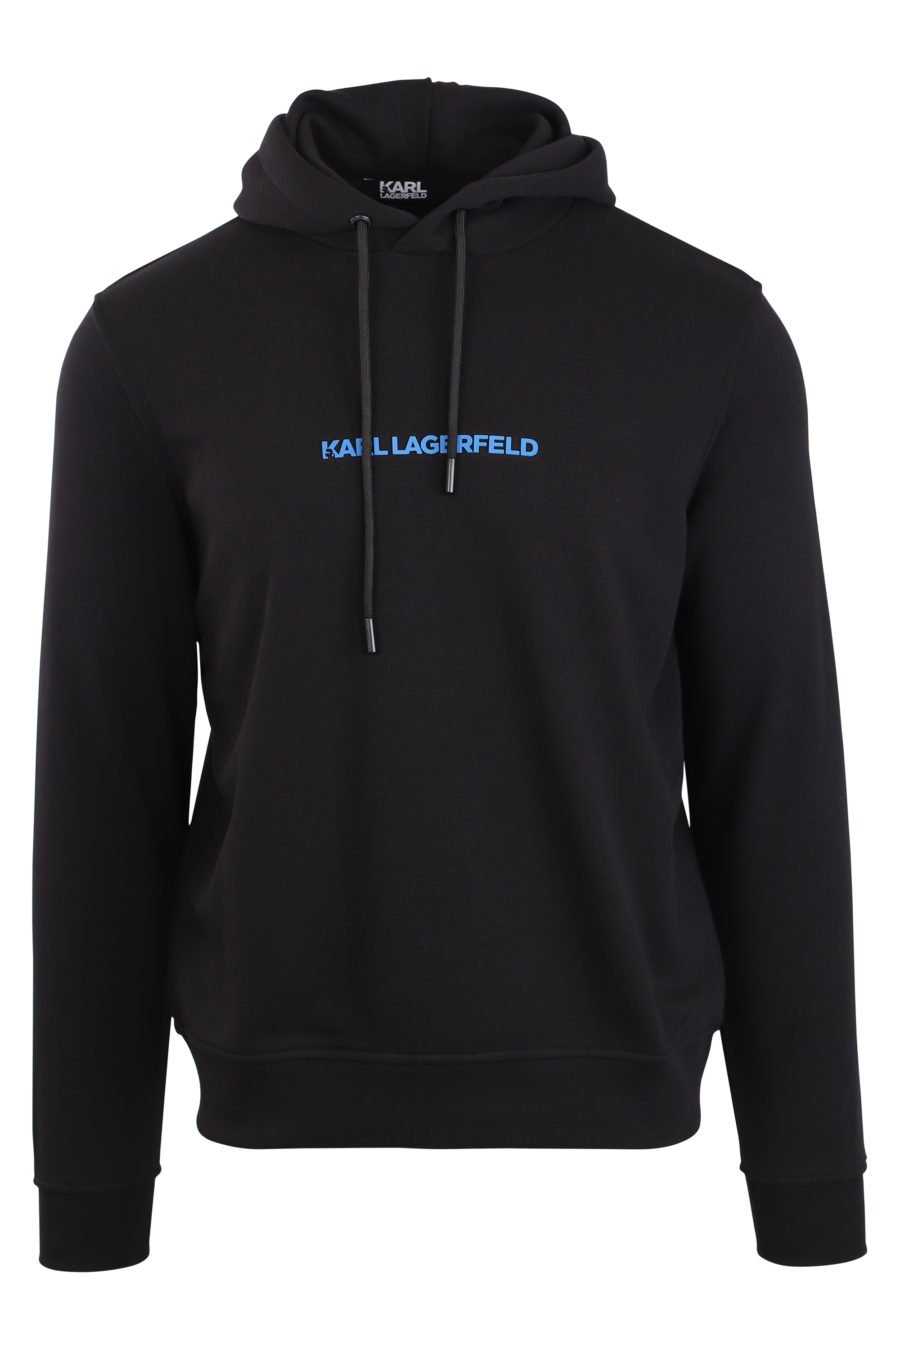 Black sweatshirt with hood and blue logo - IMG 0909